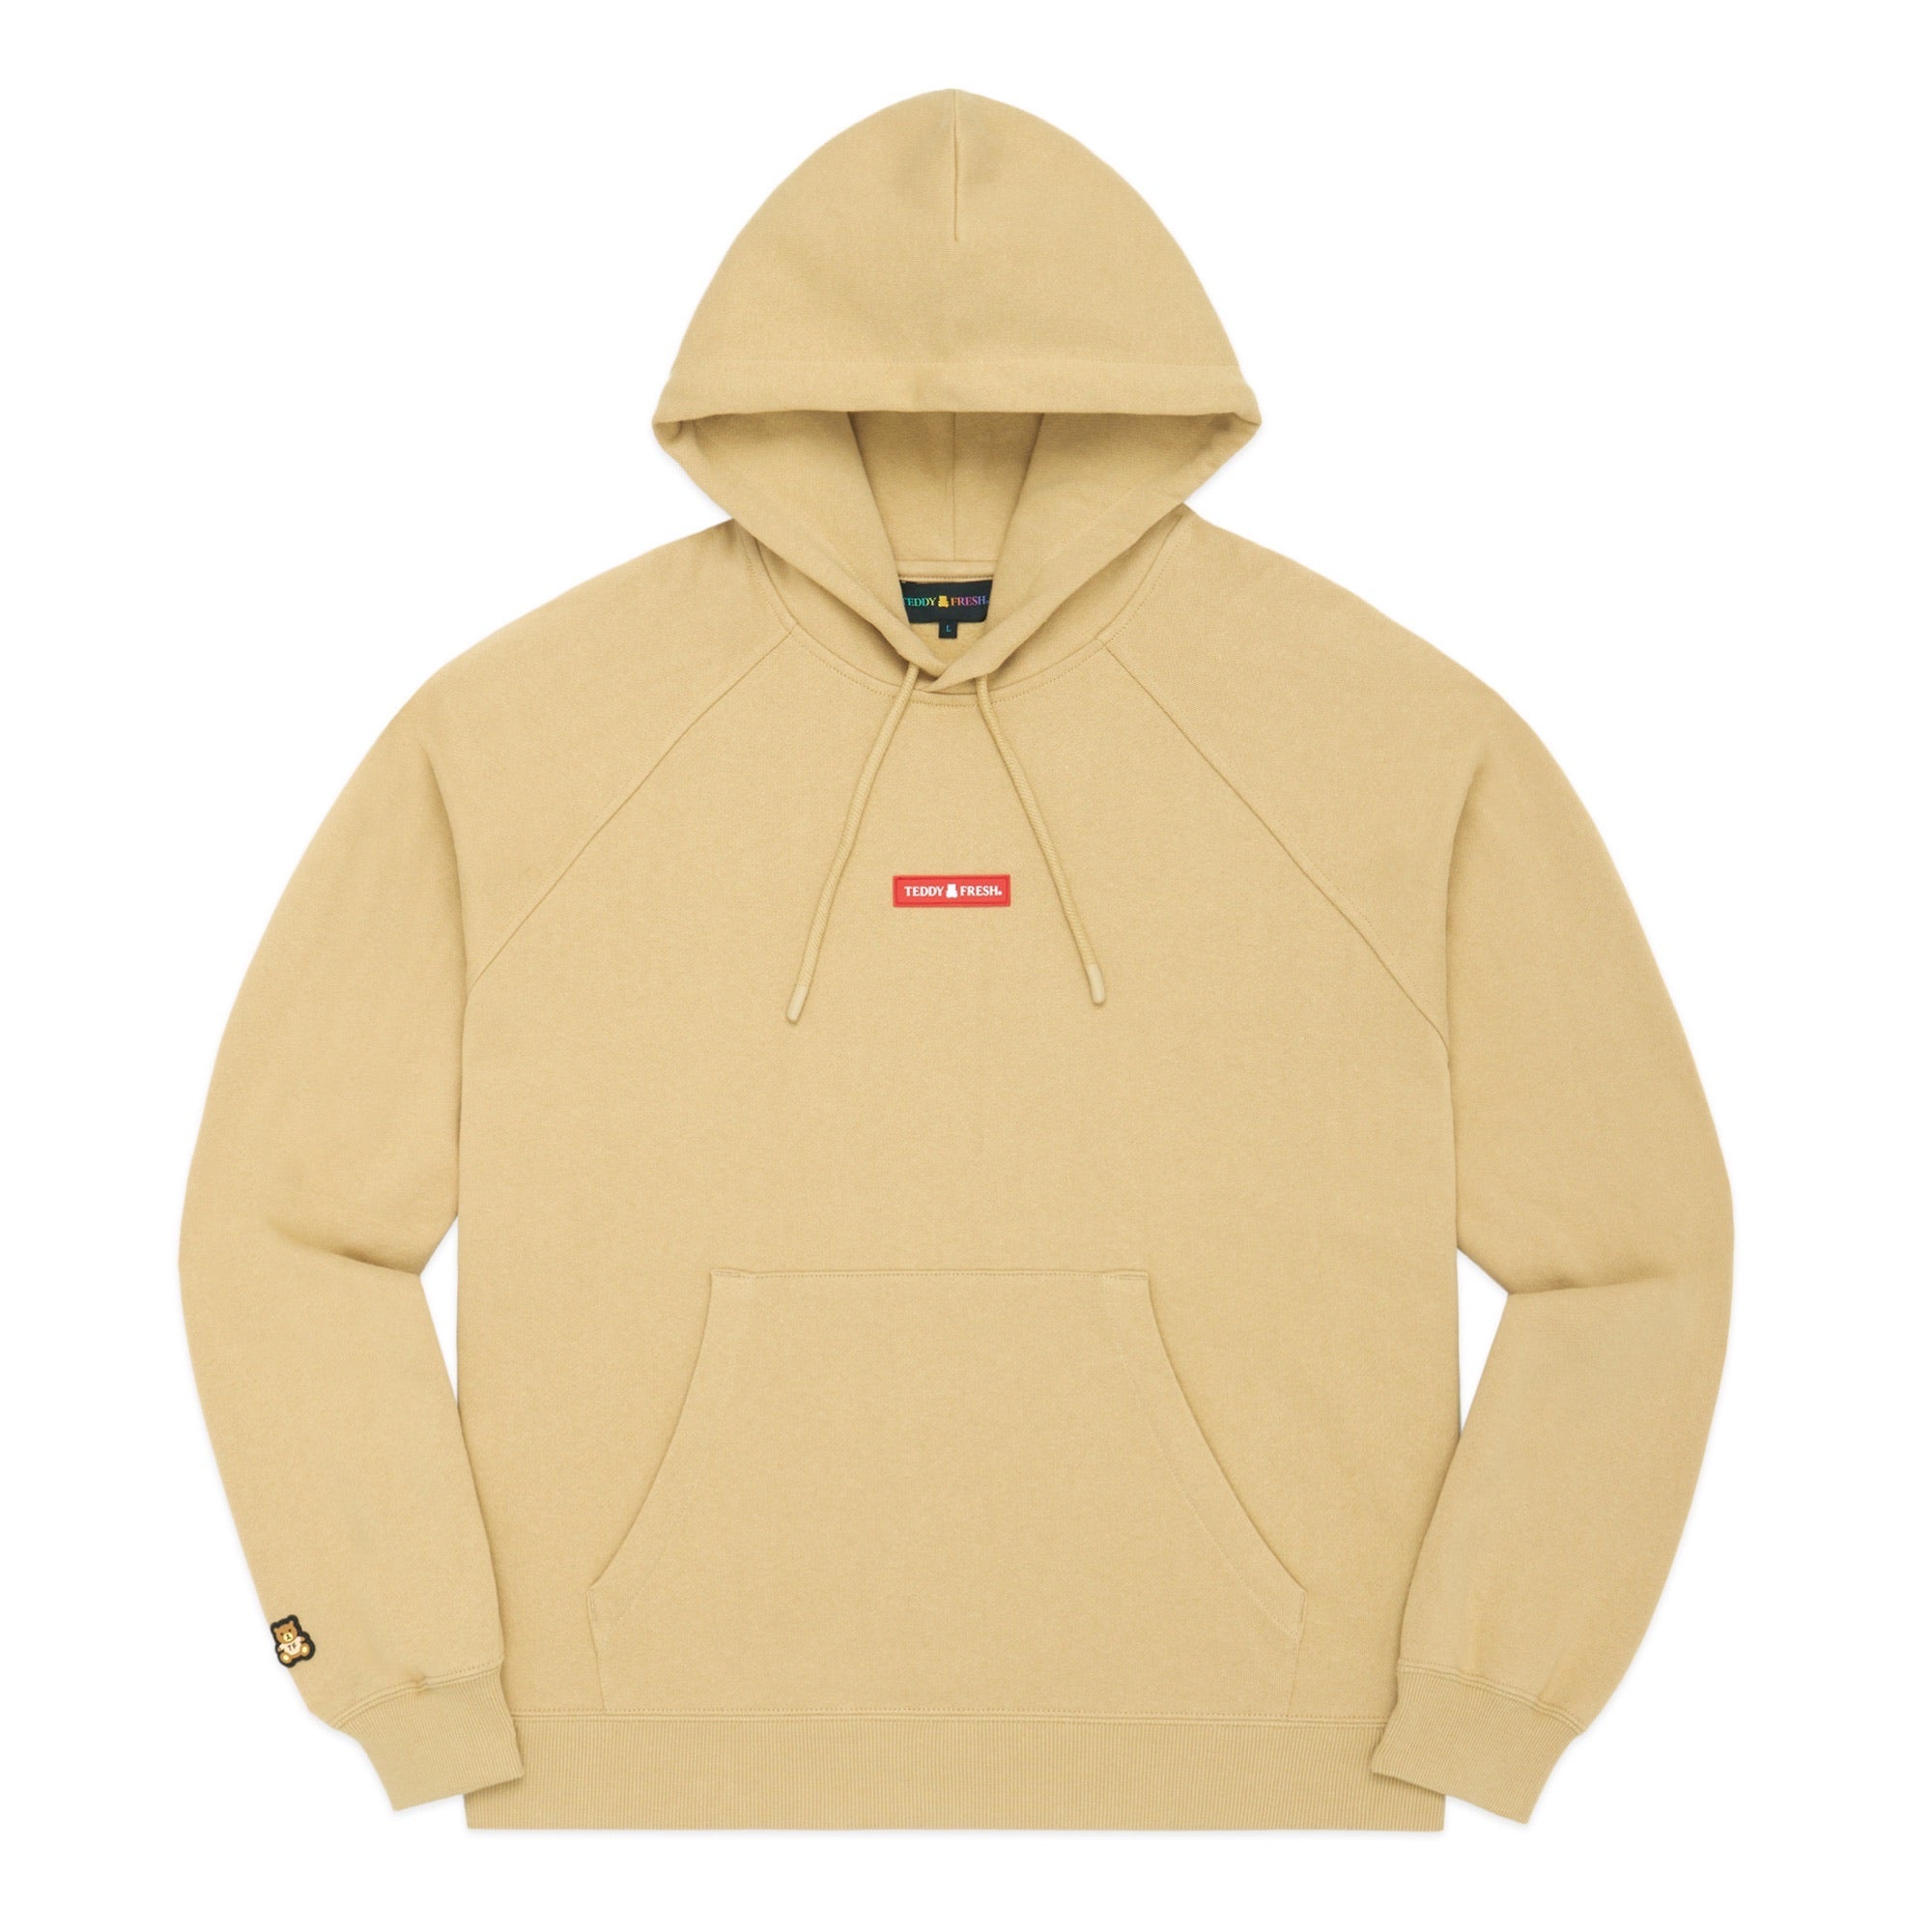 Want to buy quilted hoodie : r/TeddyFresh